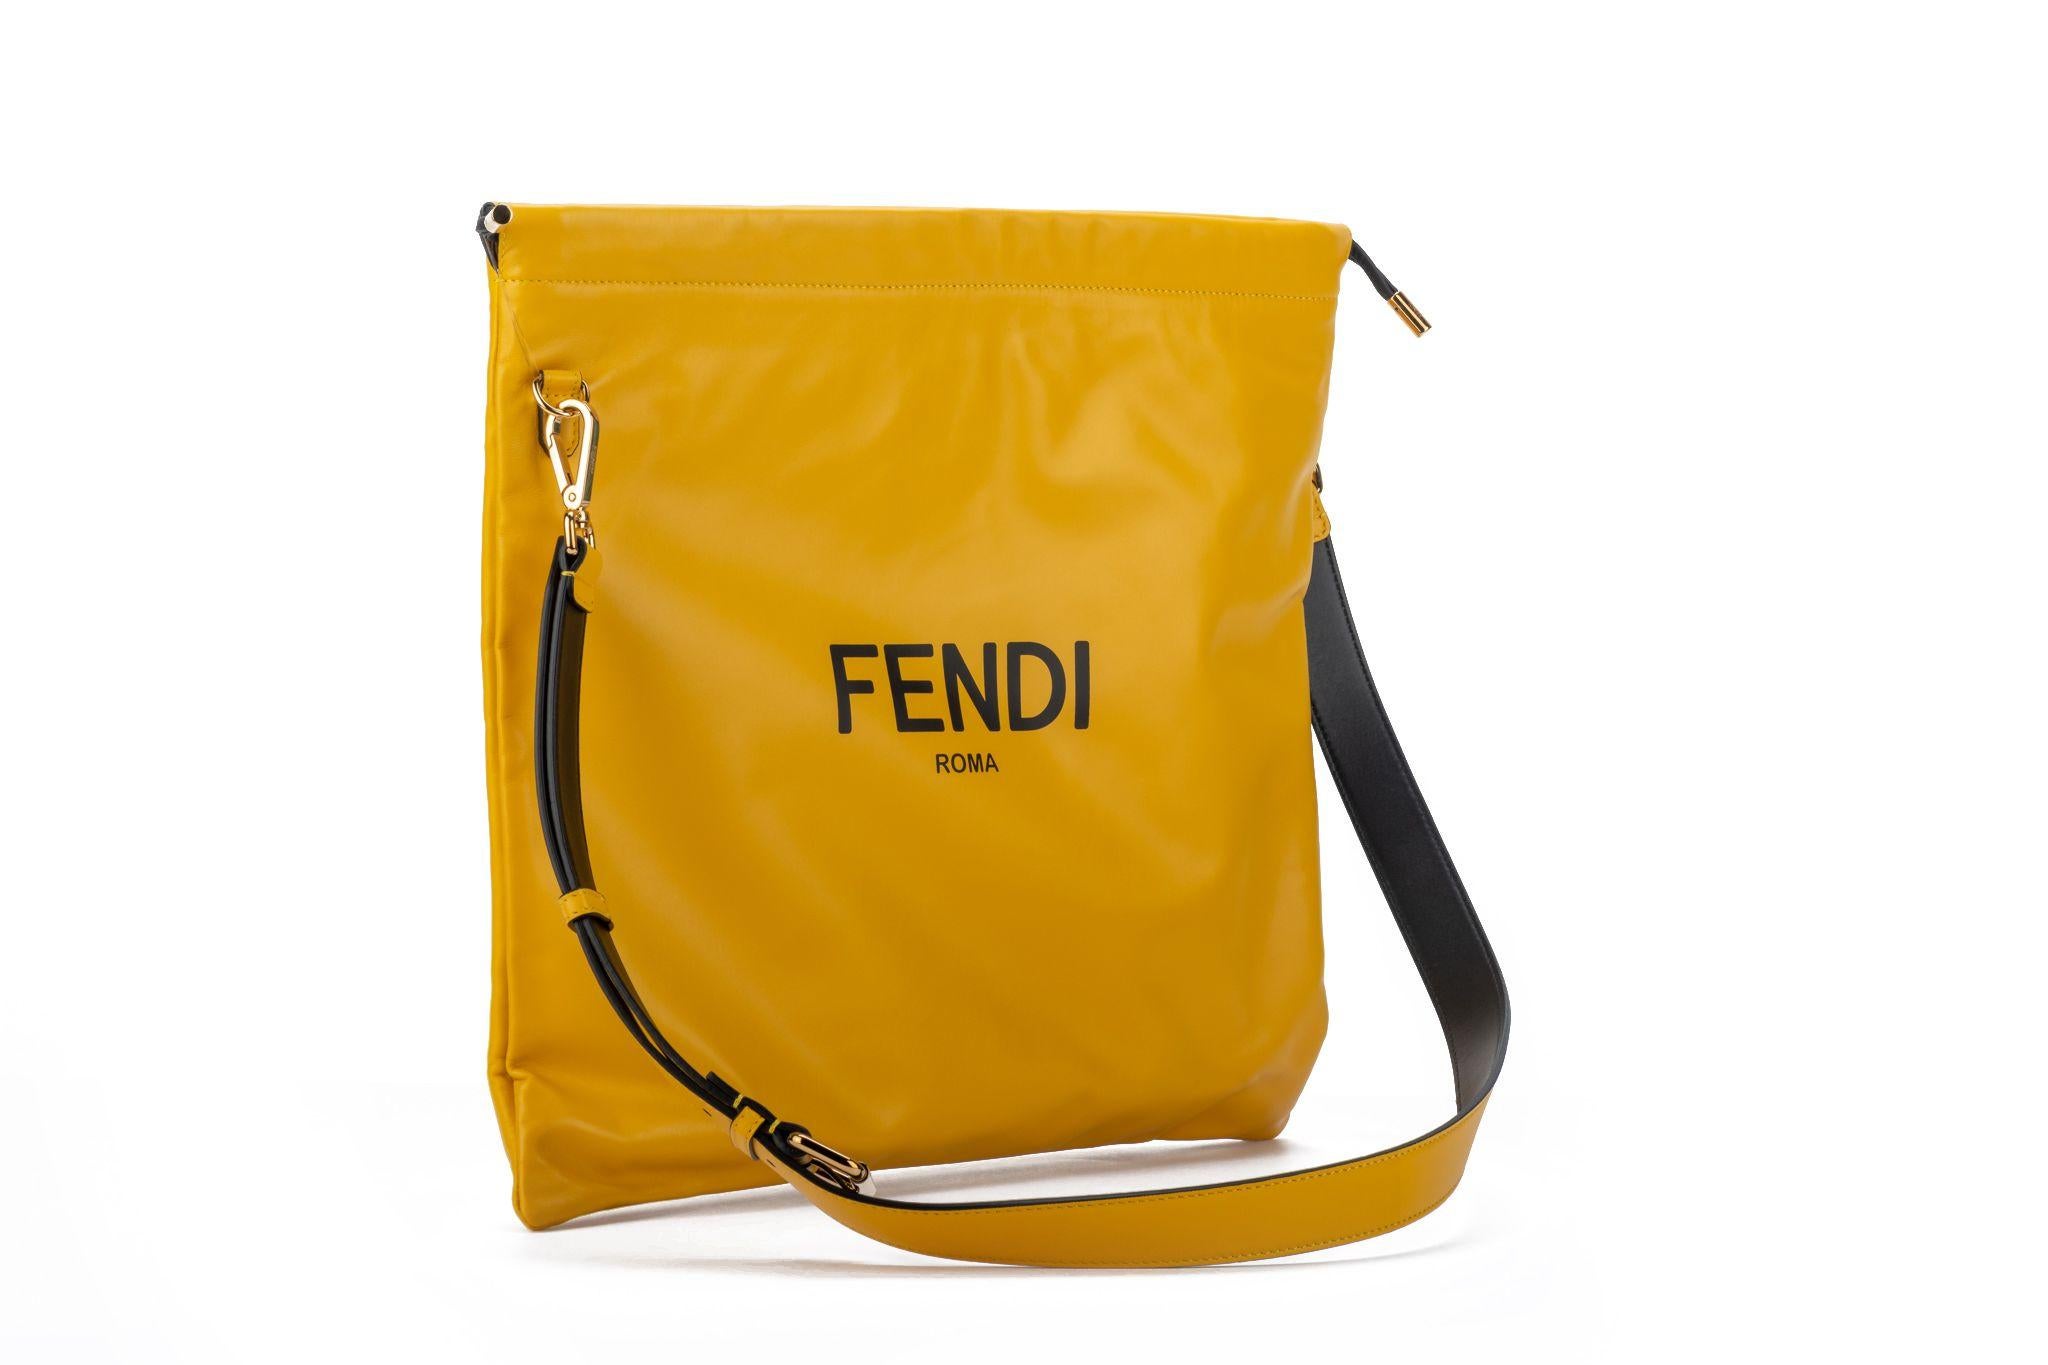 Fendi neue große gelbe Lammfell Cross Body Bag. 20